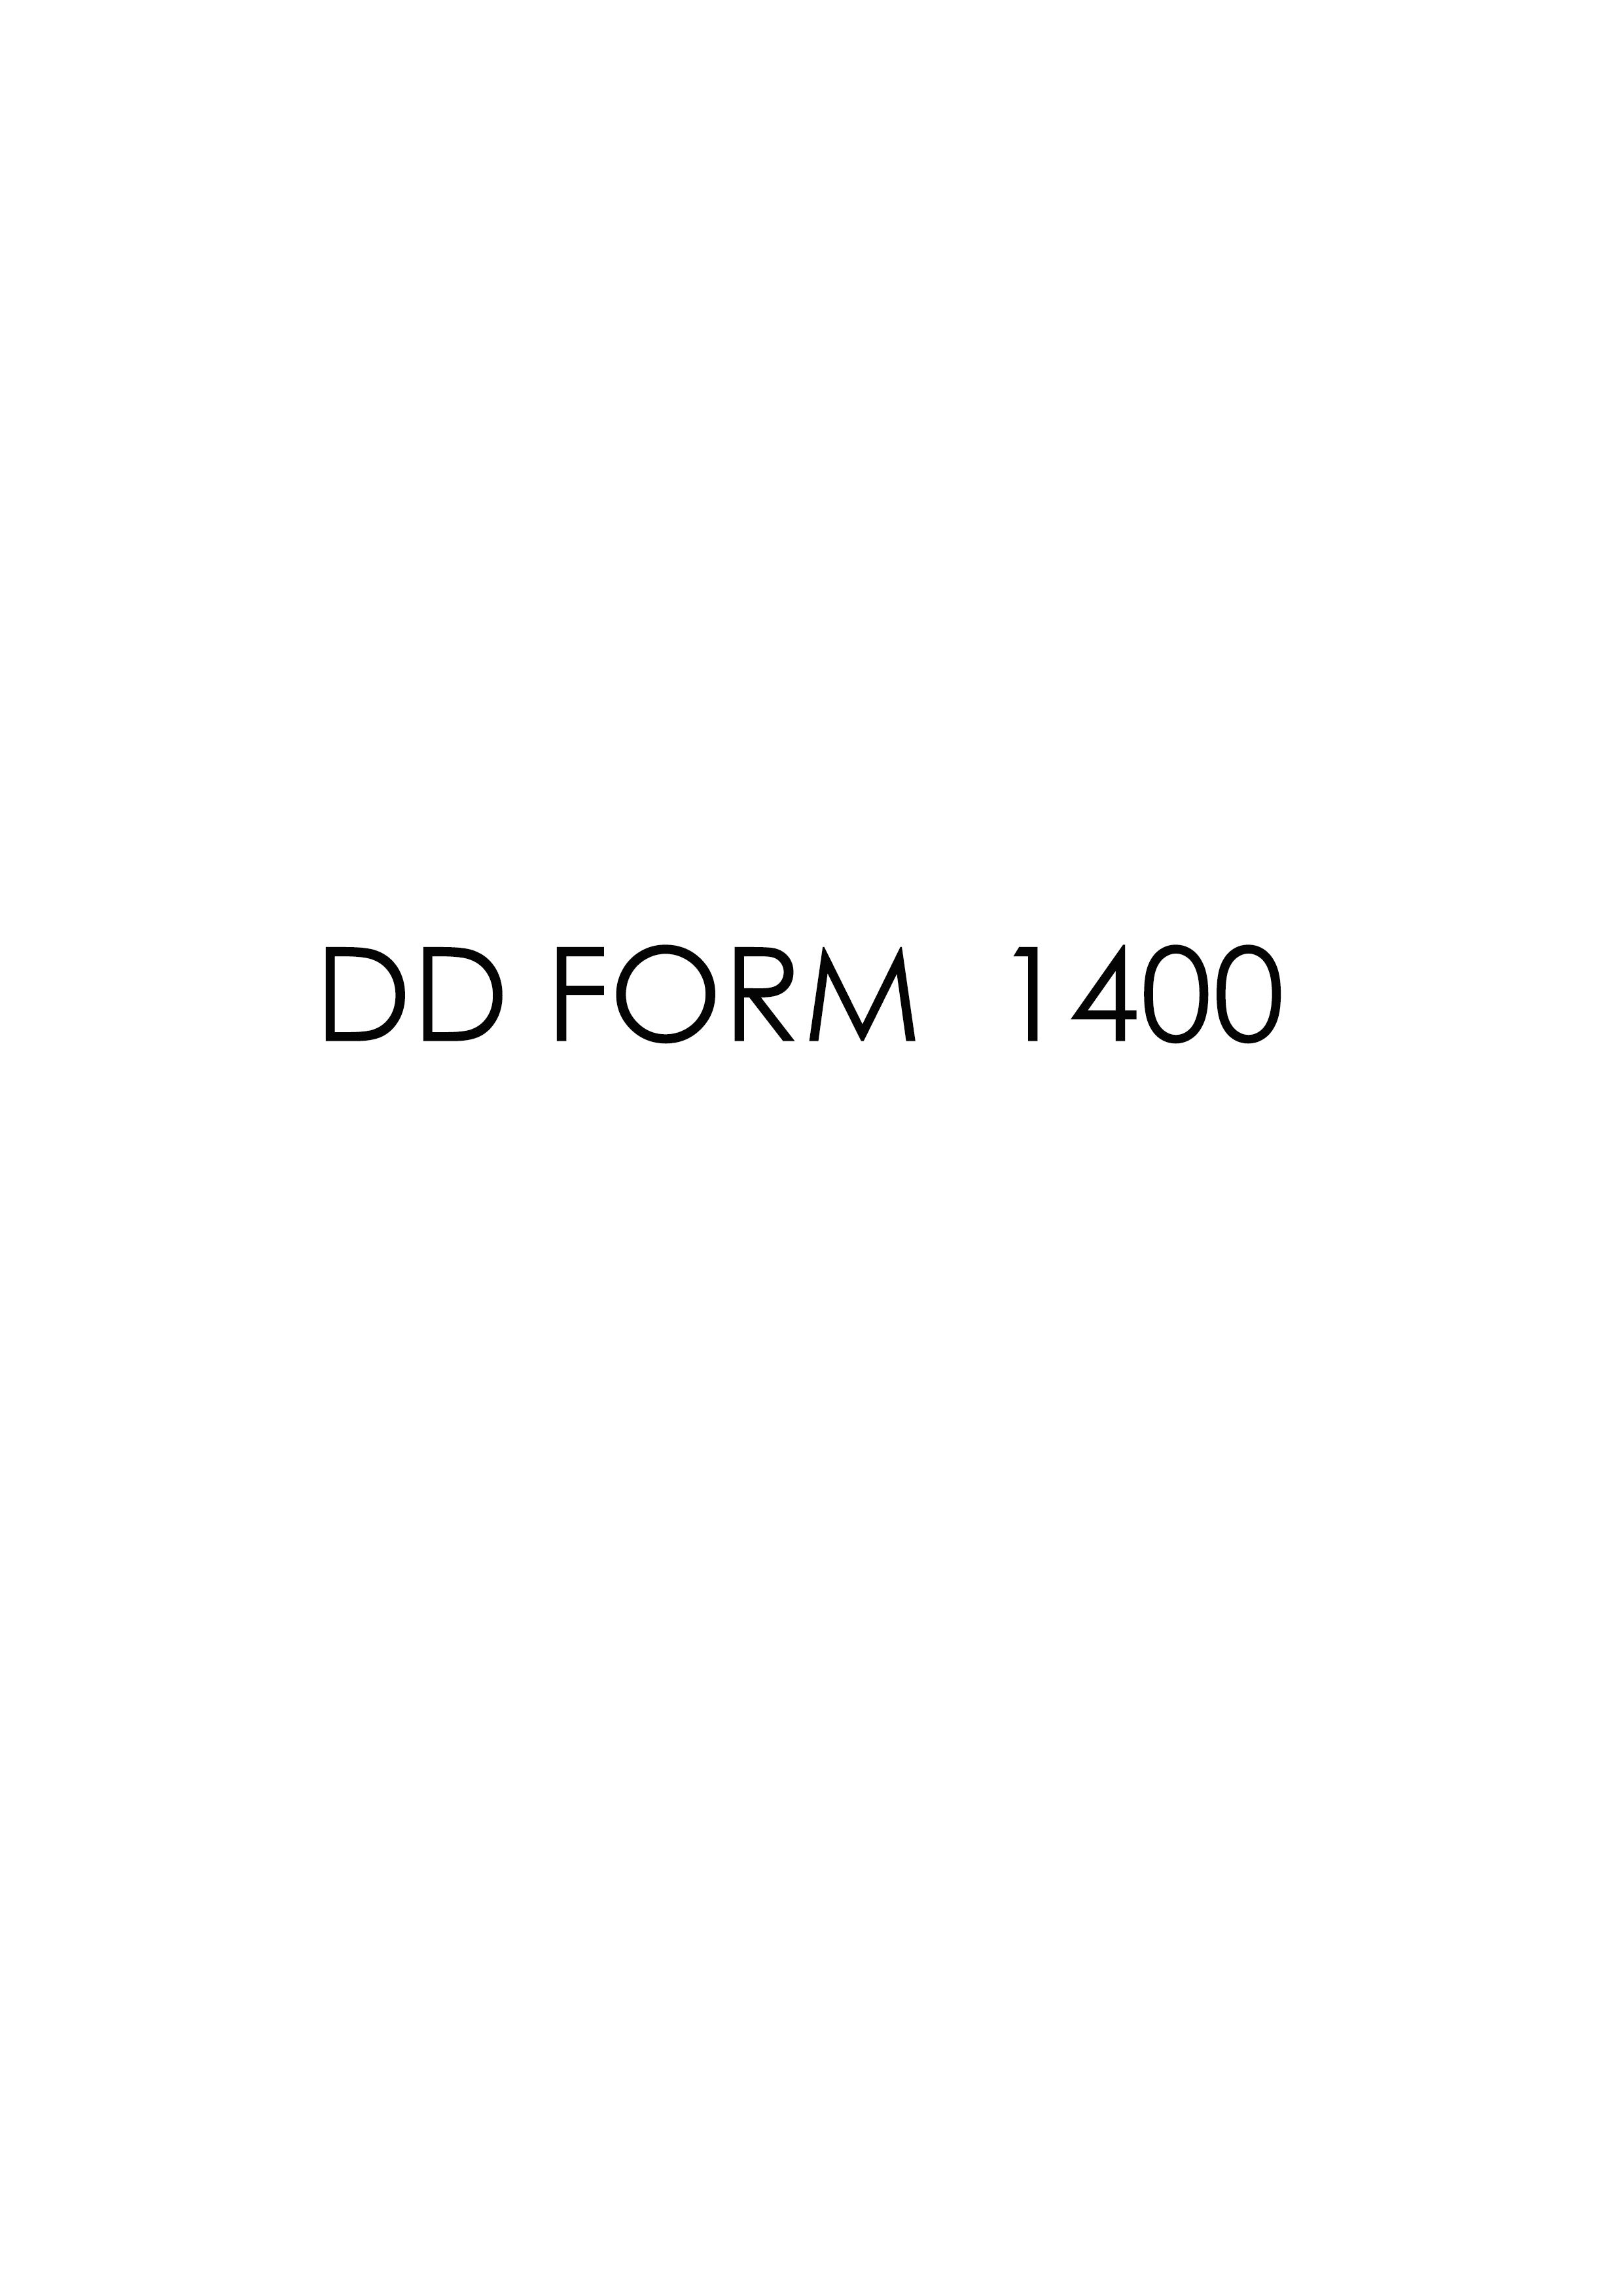 Download dd 1400 Form